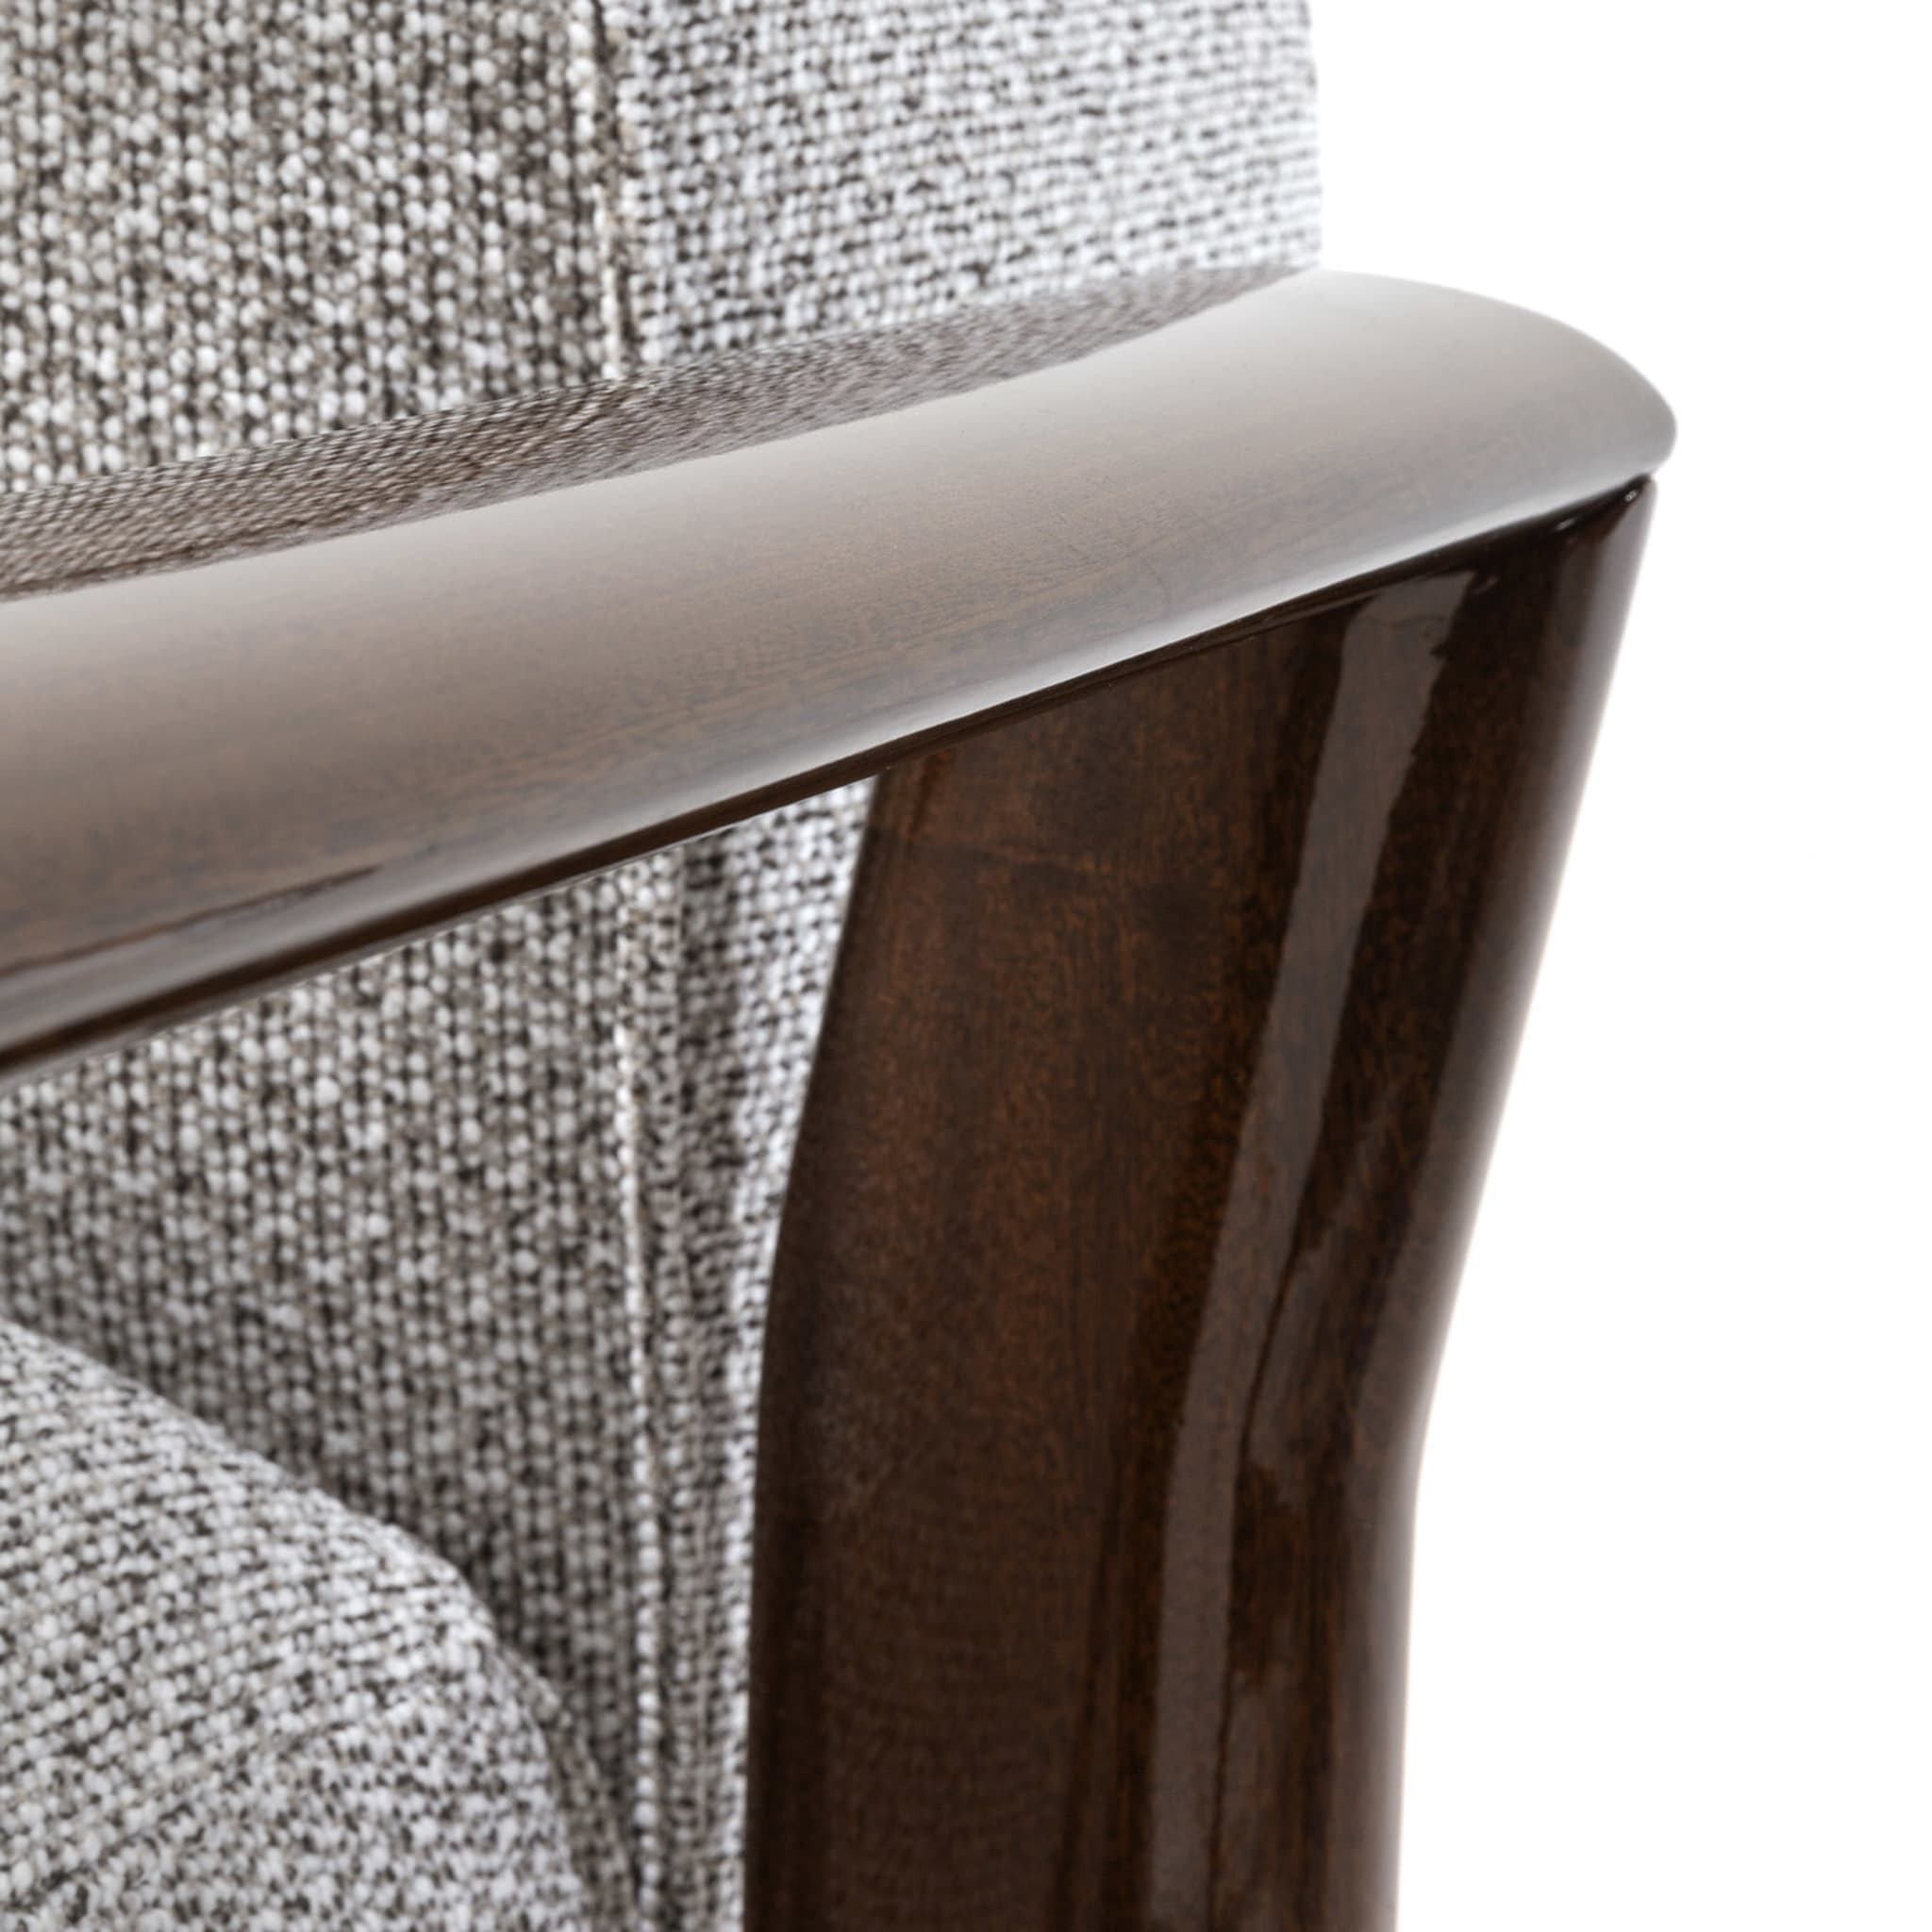 Elba Modular Barrique + Gray Lounge Seat by Massimo Castagna - Alternative view 1